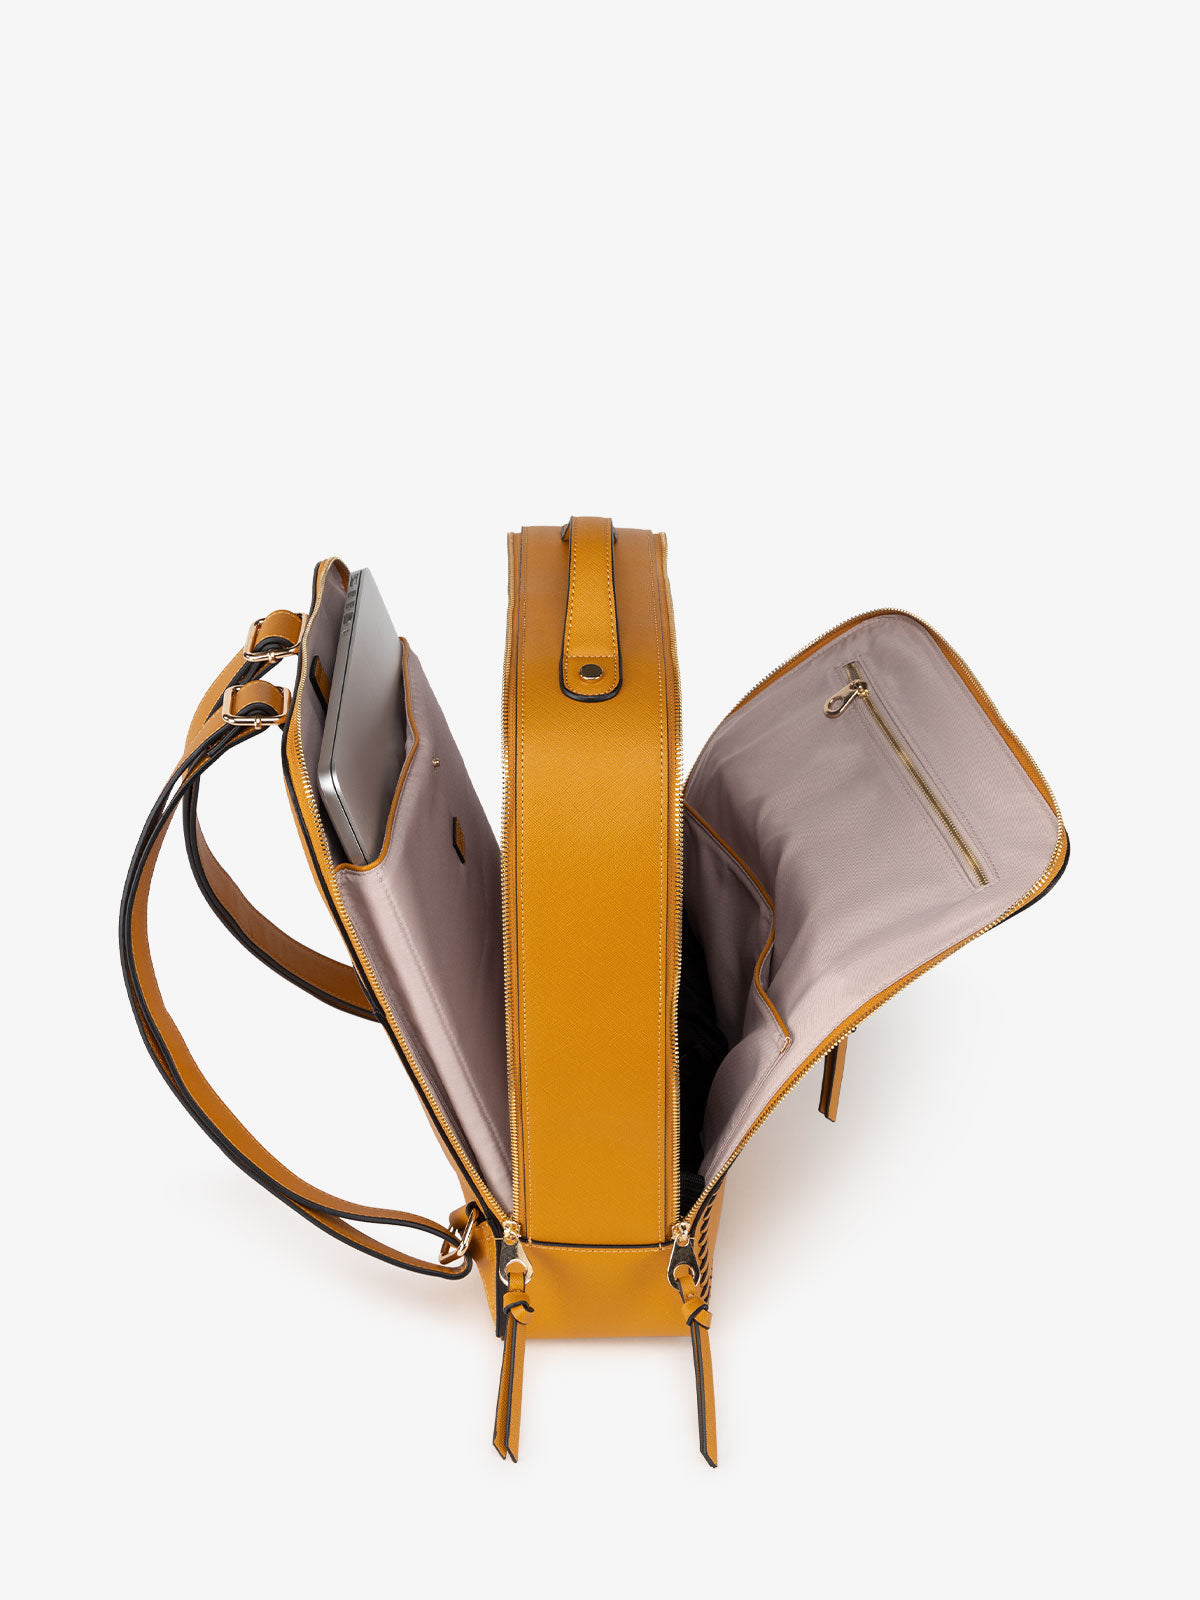 CALPAK Kaya laptop backpack for women in yellow honey color